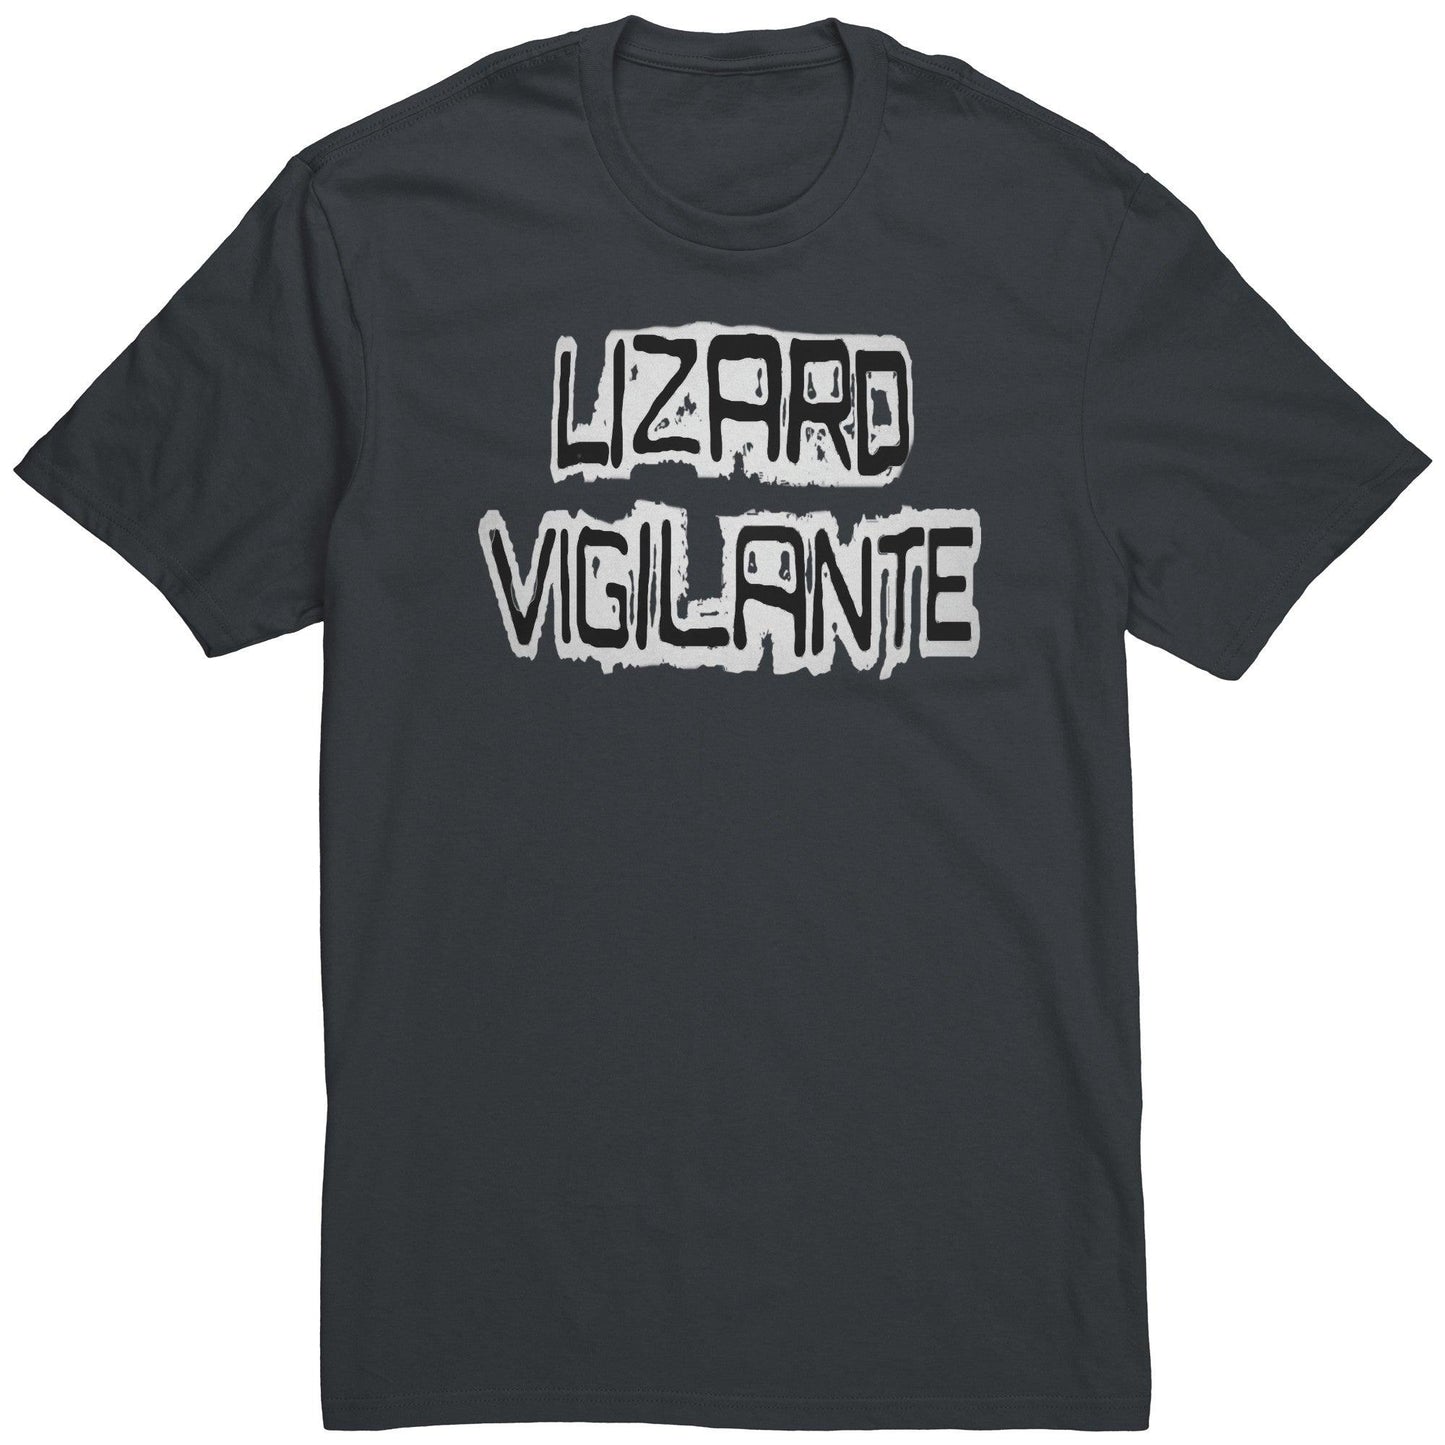 Lizard Vigilante Logoo Black & White on a Color District Mens Shirt - Badasss! - Lizard Vigilante